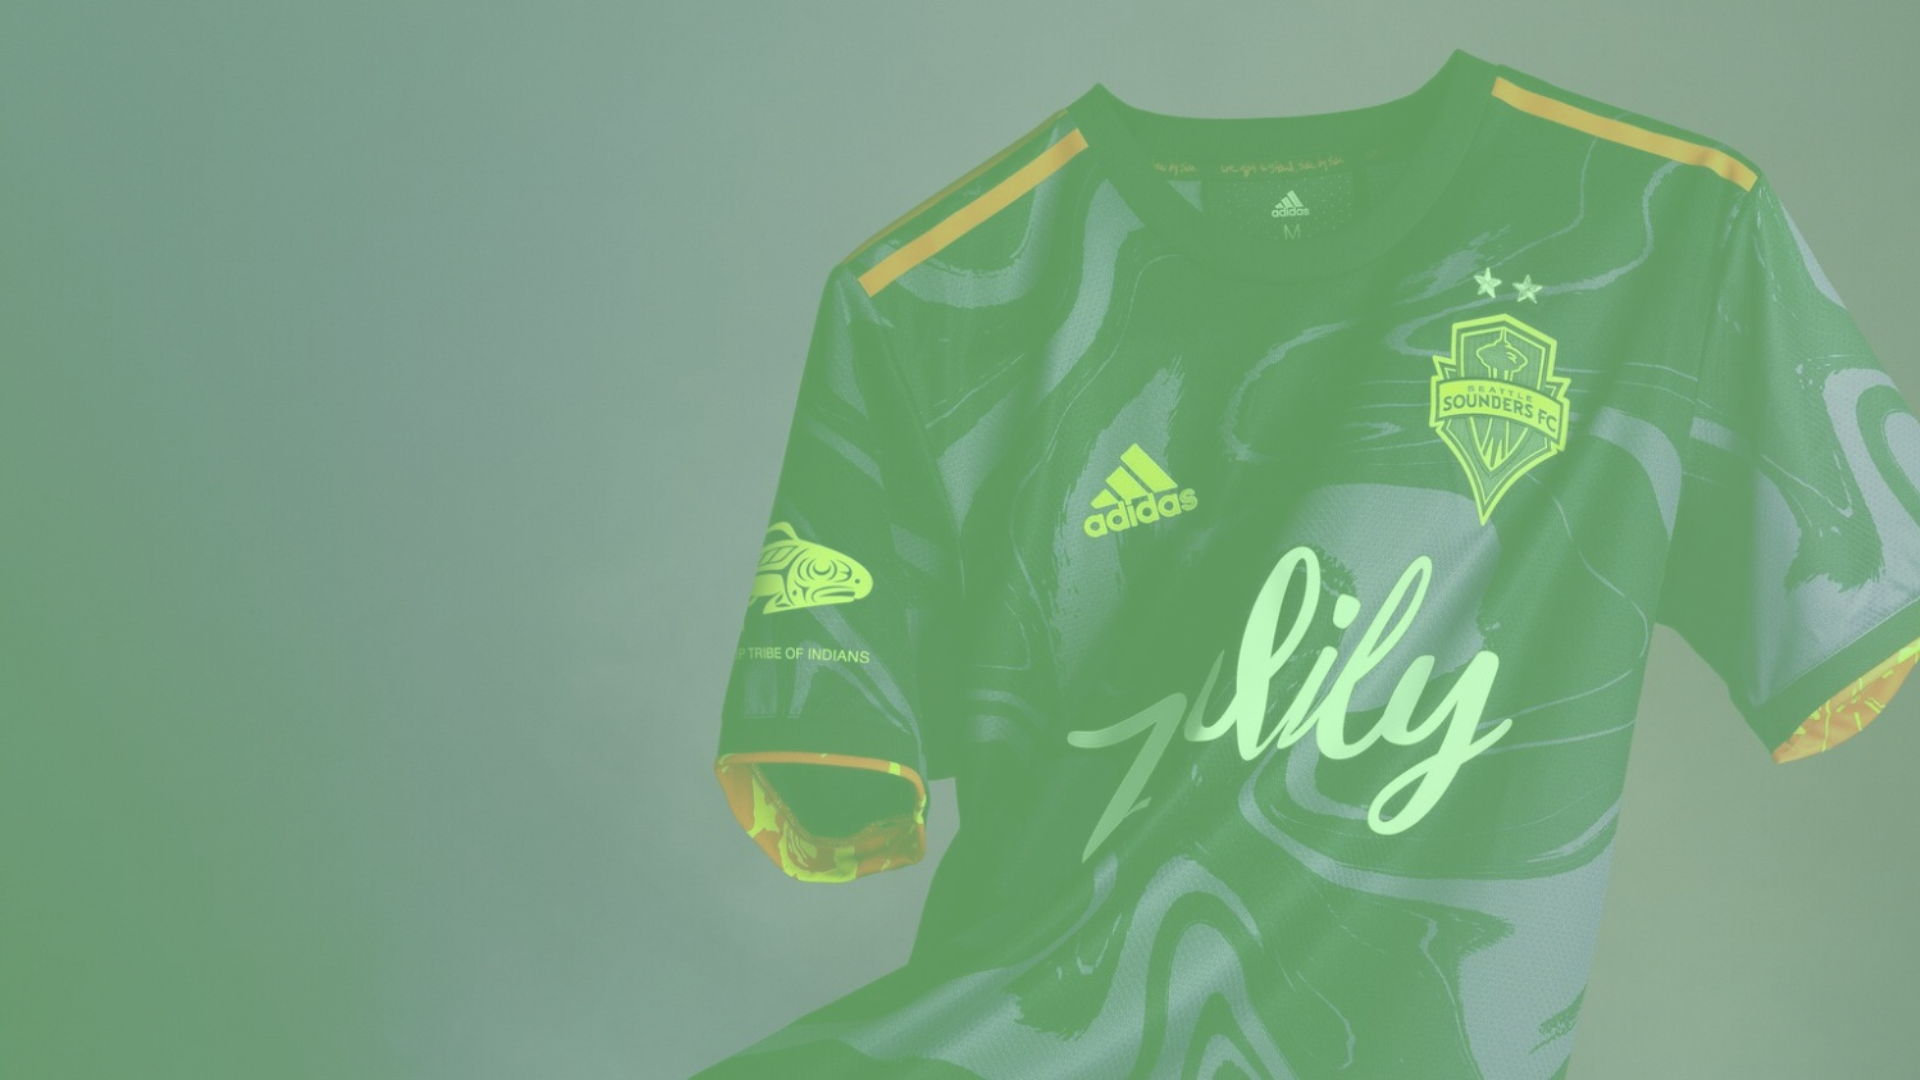 Don't buy replica MLS jerseys - Football Shirt Collective